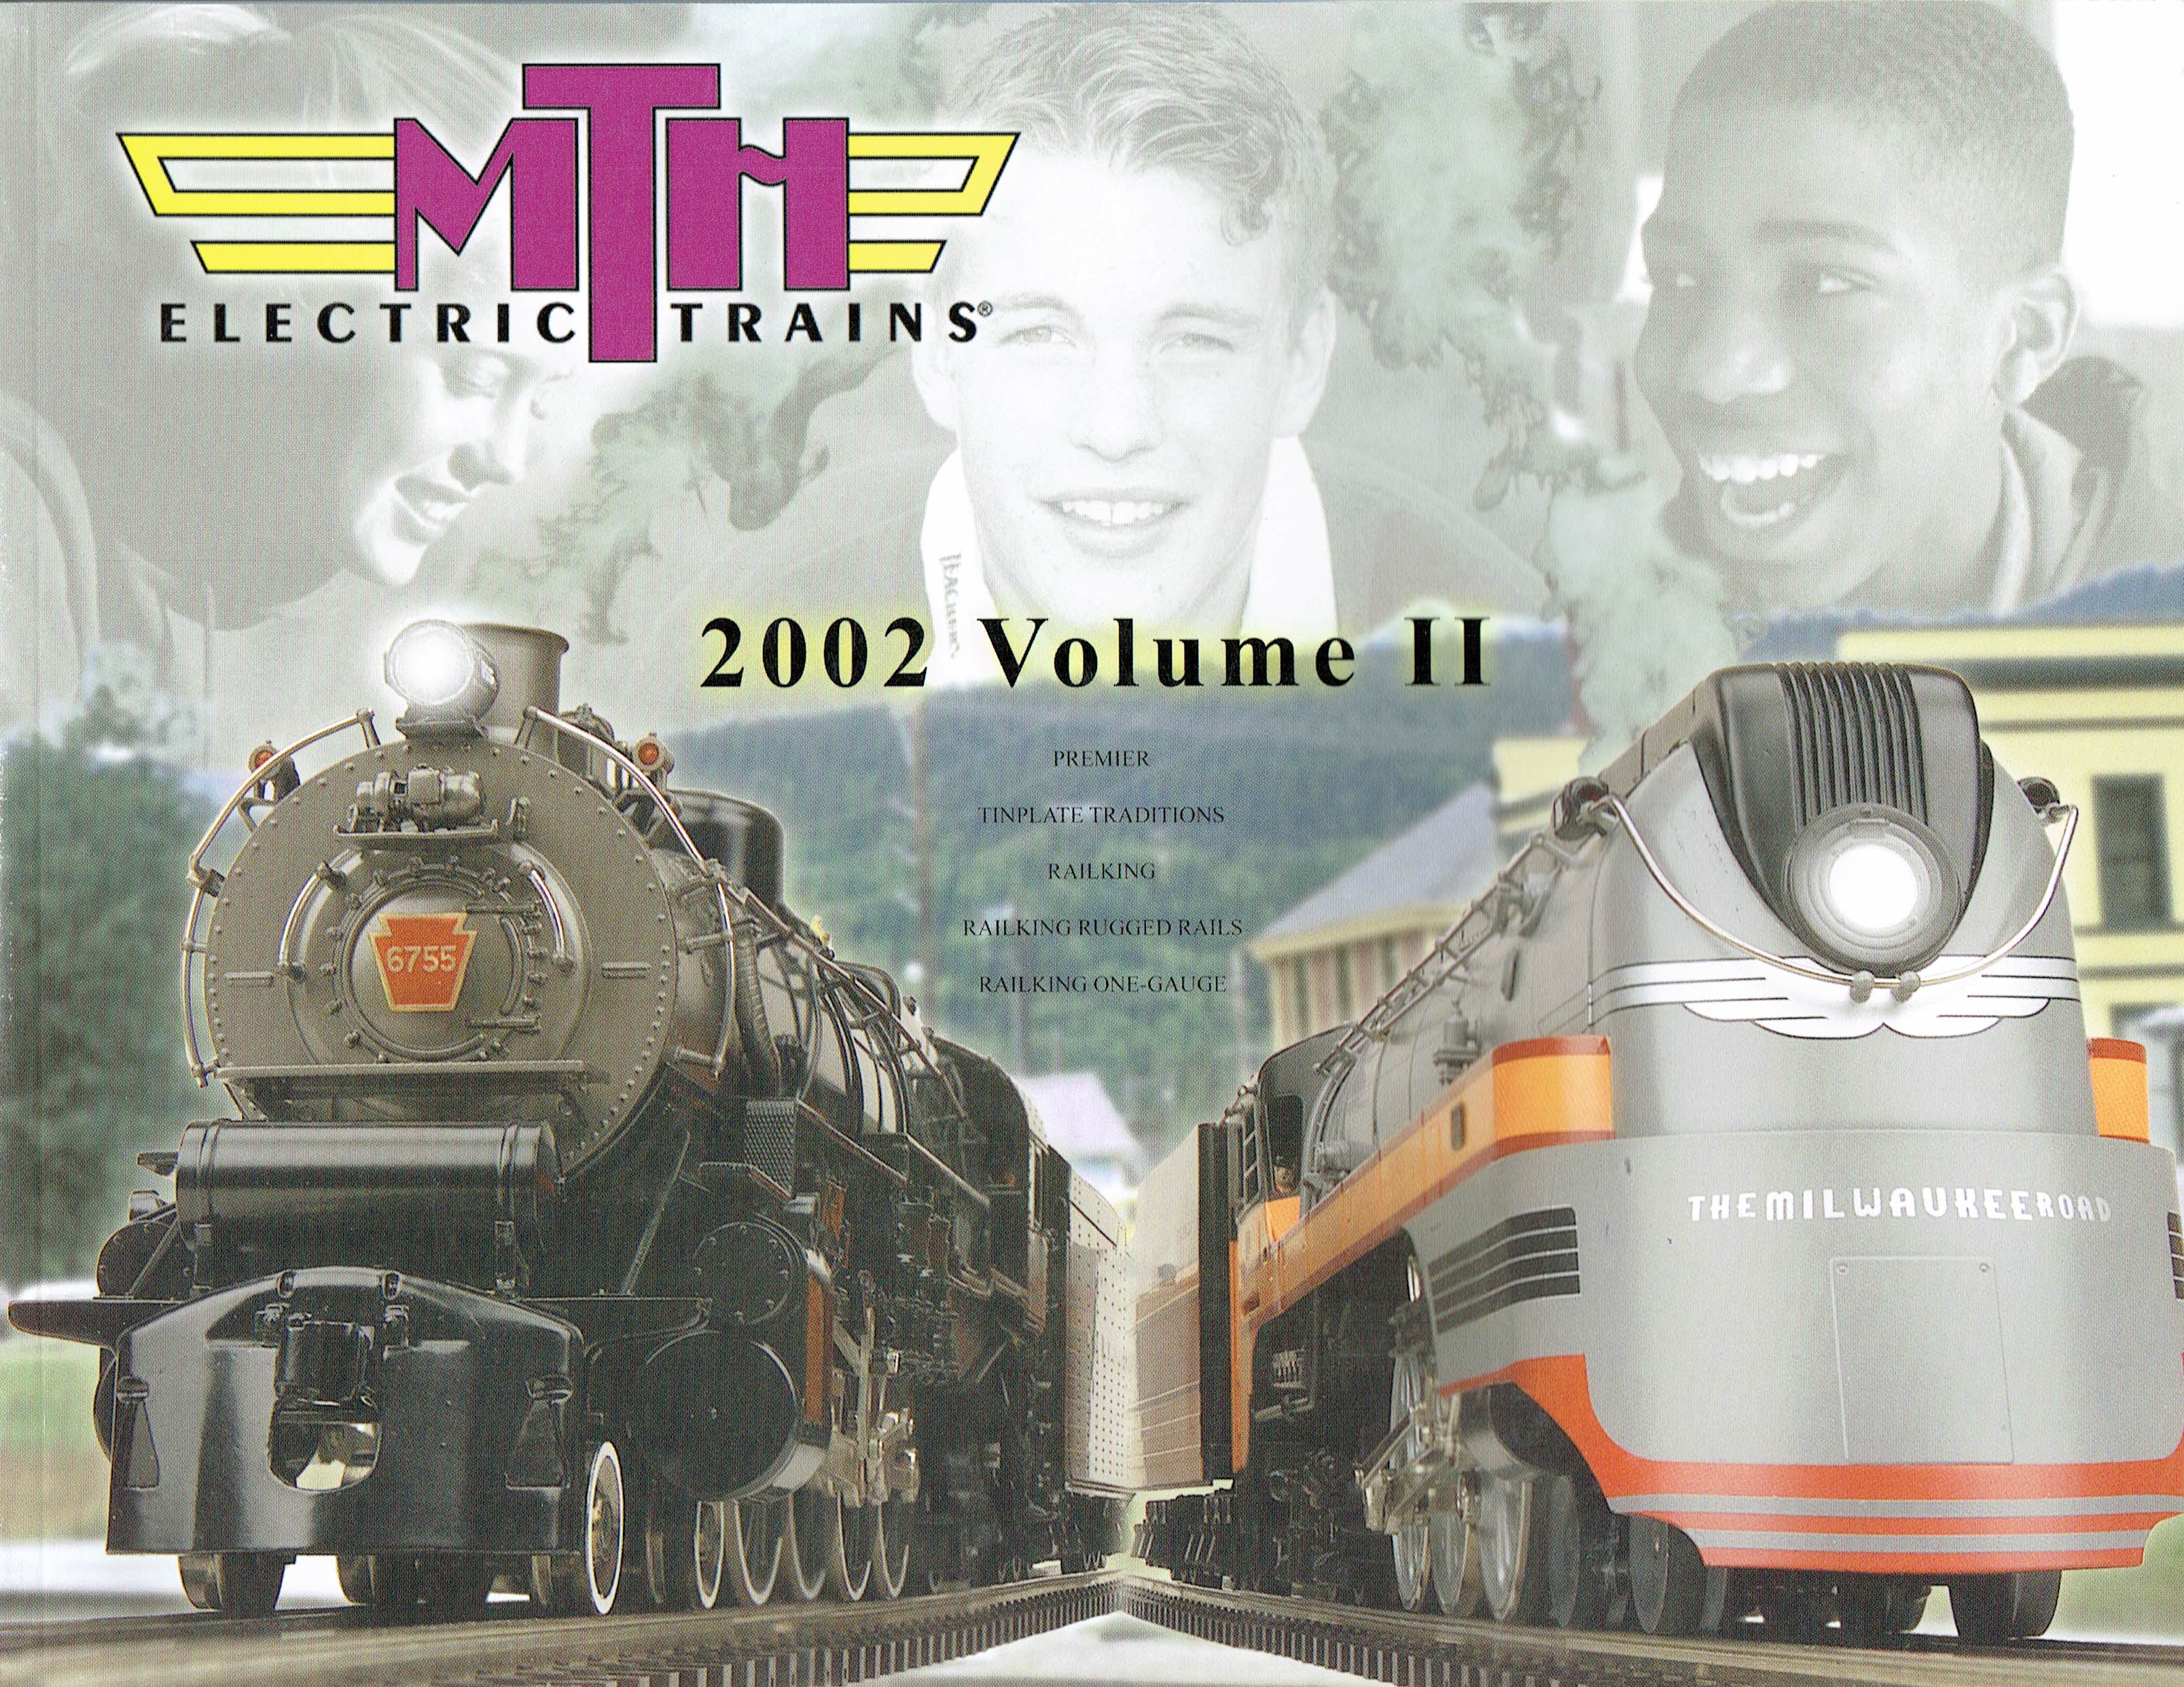 MTH 2002 Volume II Catalog image